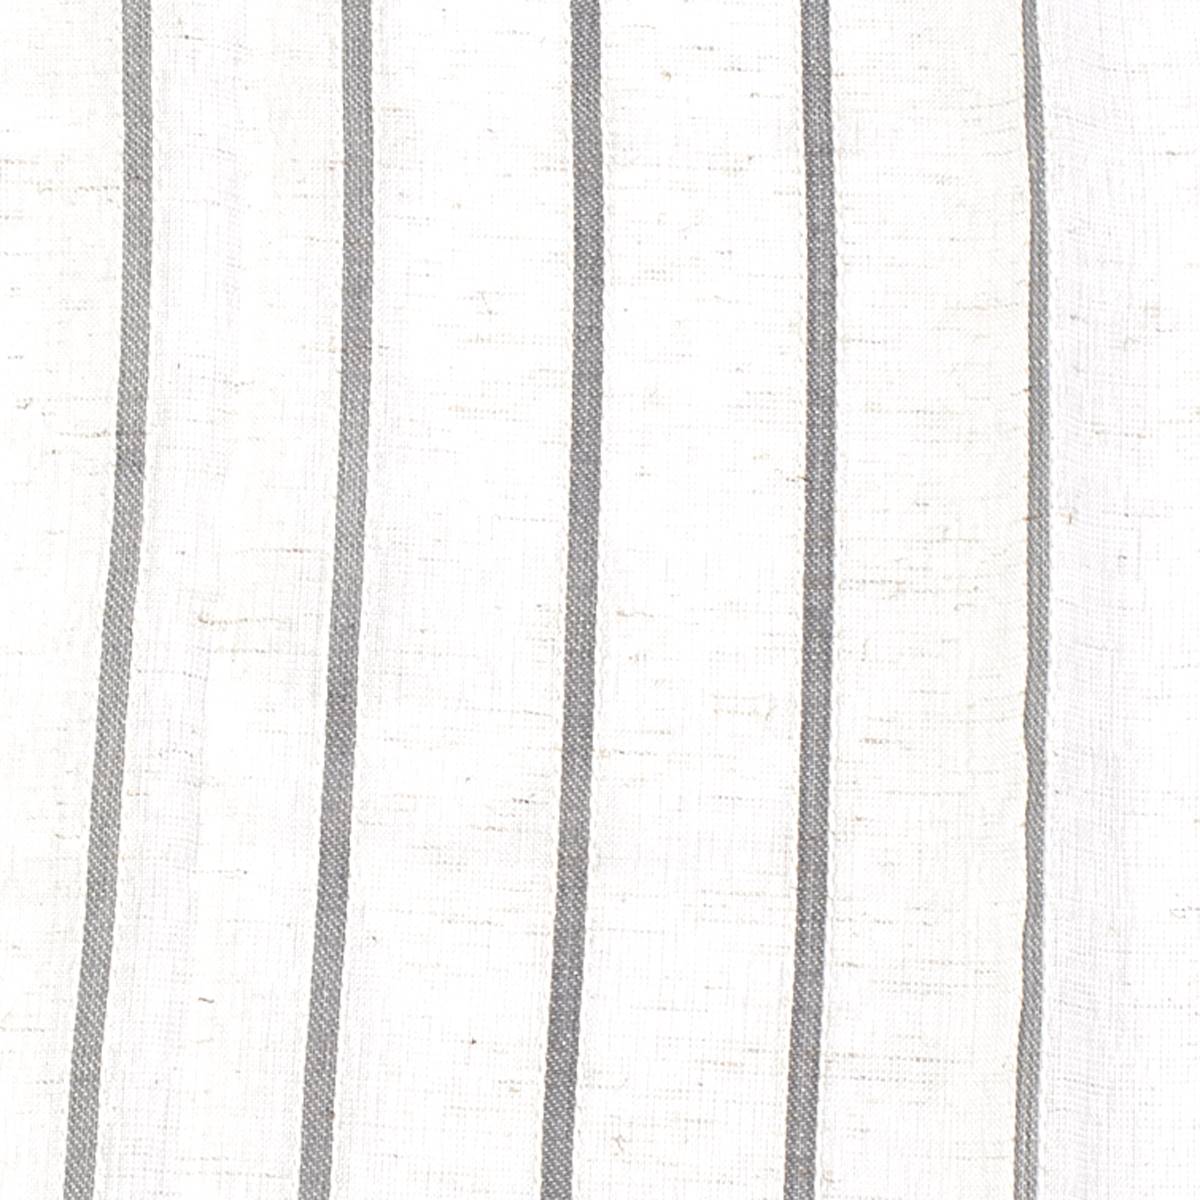 Martha Stewart Laguna Stripe Panel Curtain